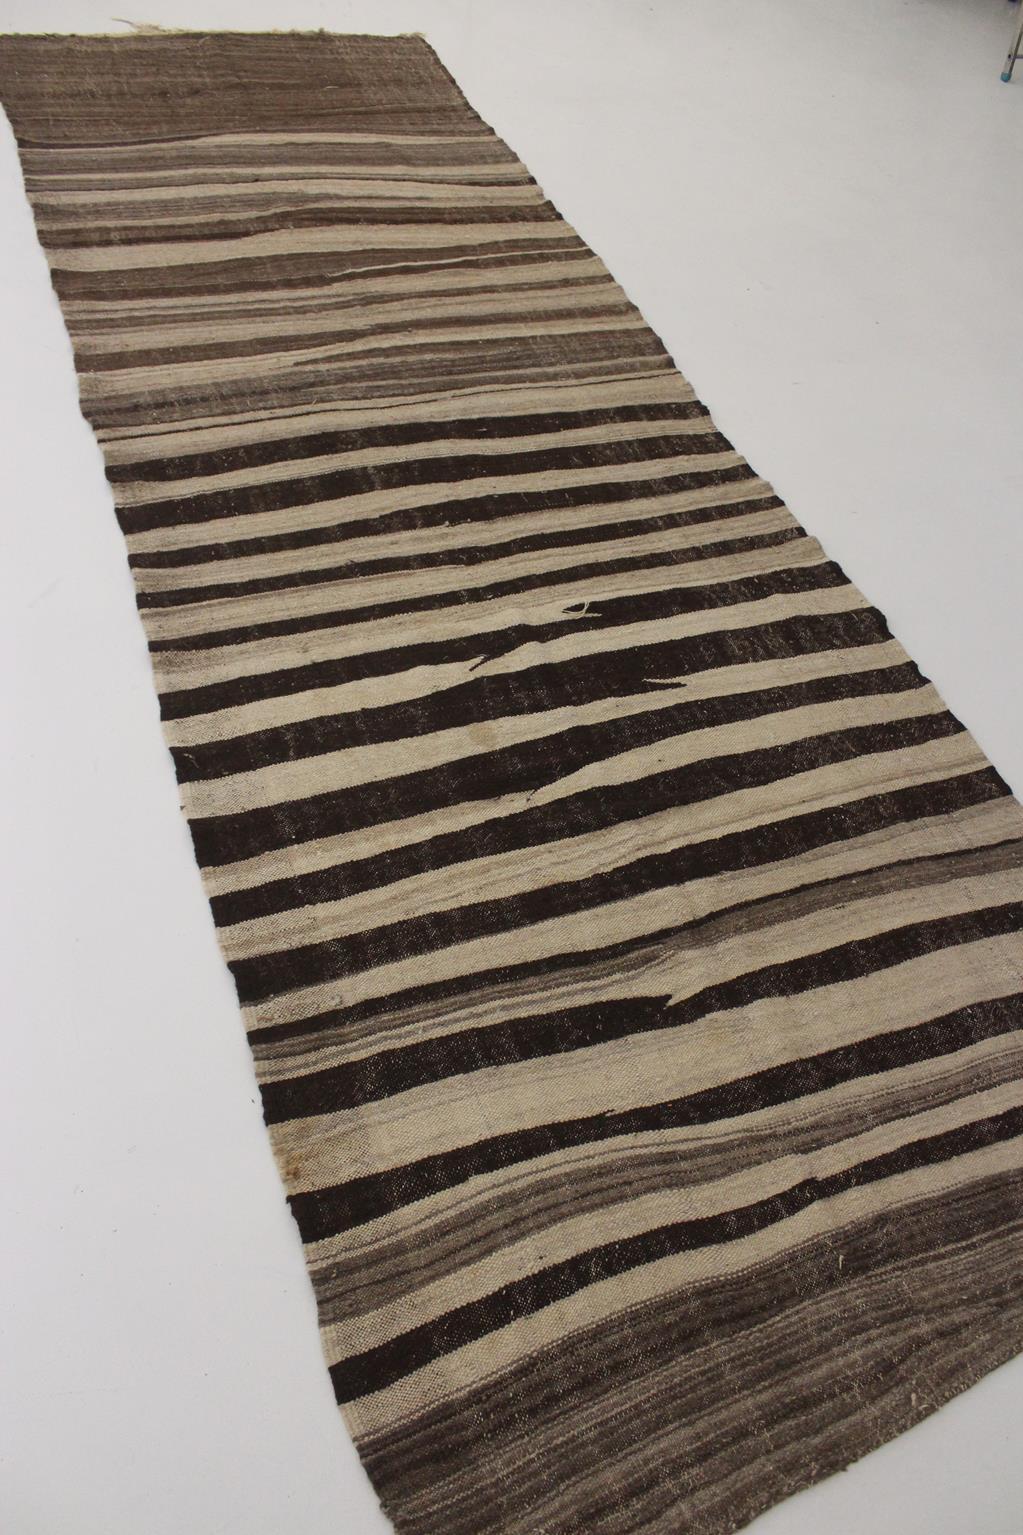 Vintage Moroccan Kilim rug - Stripes in beige+brown - 4.6x14.4feet / 142x440cm For Sale 3